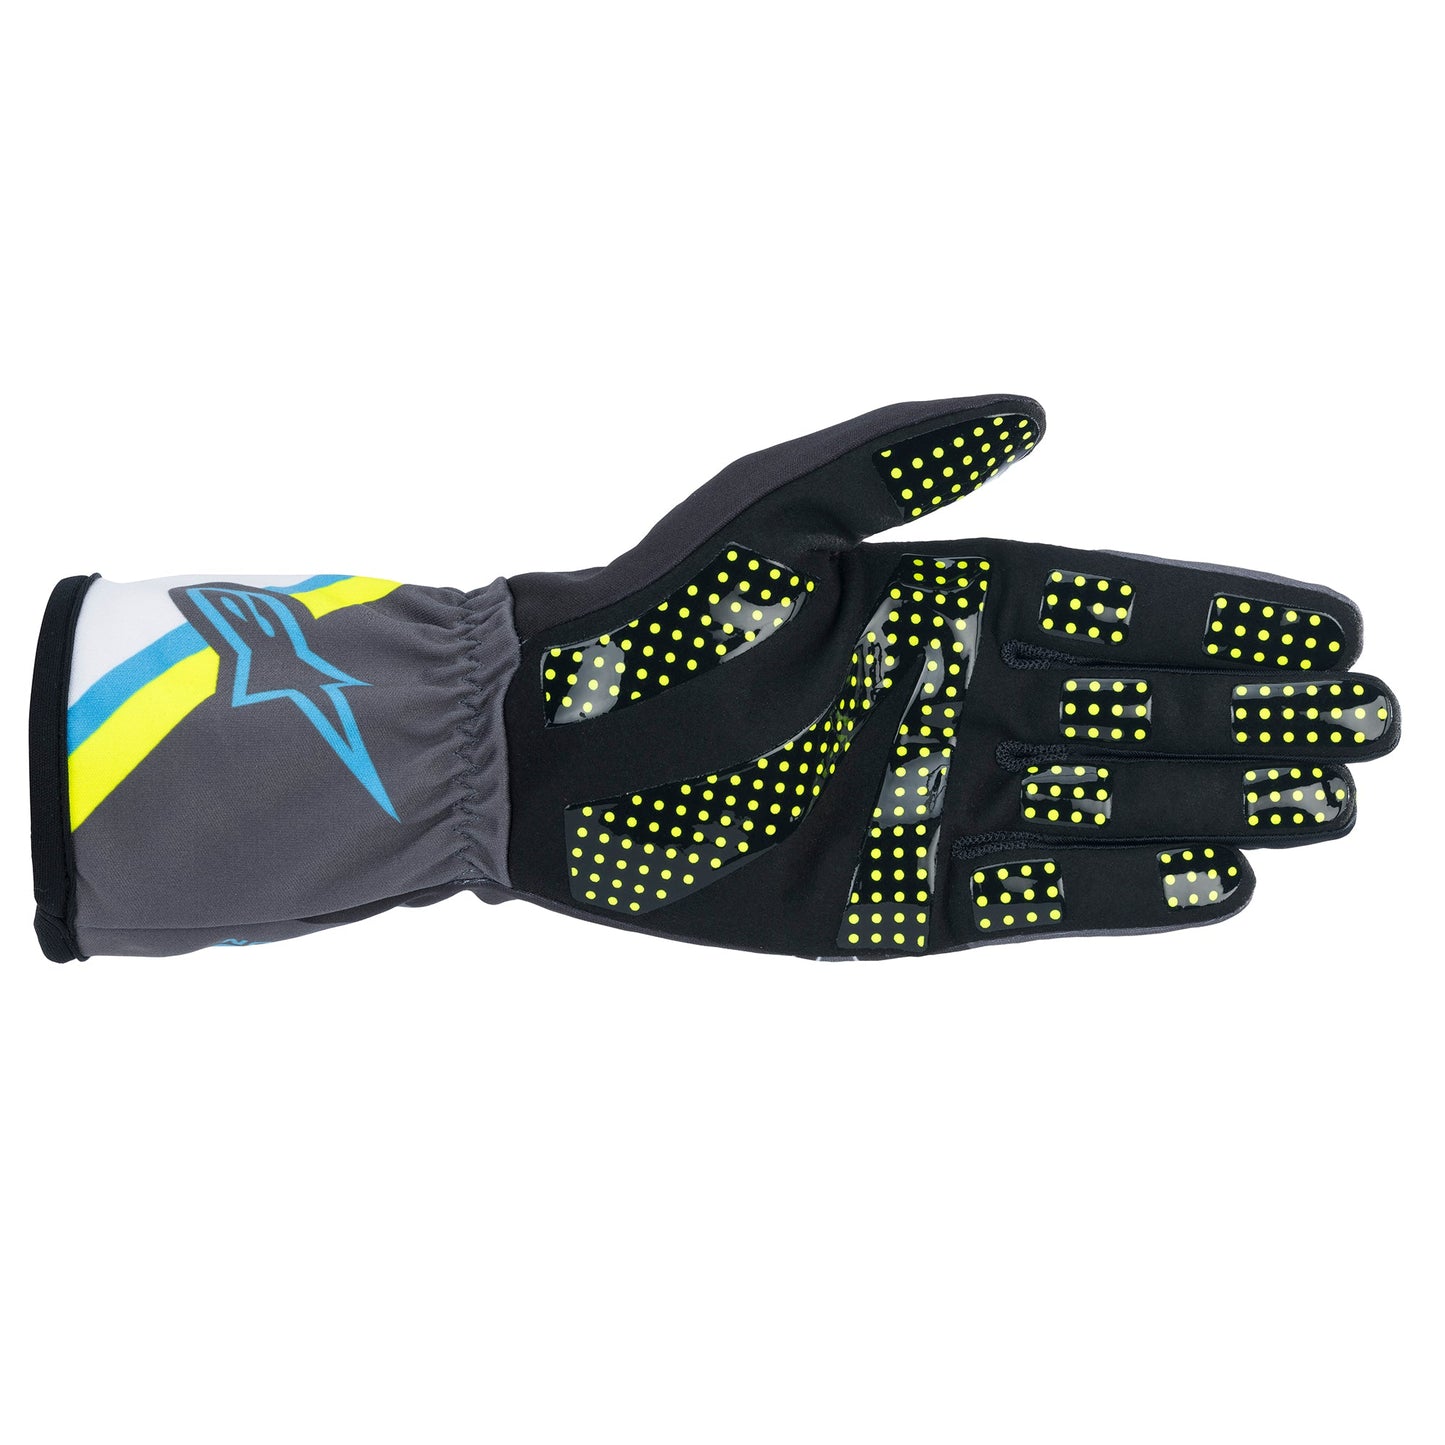 Alpinestars 2022 Tech-1 K Race S V2 Graphic Glove